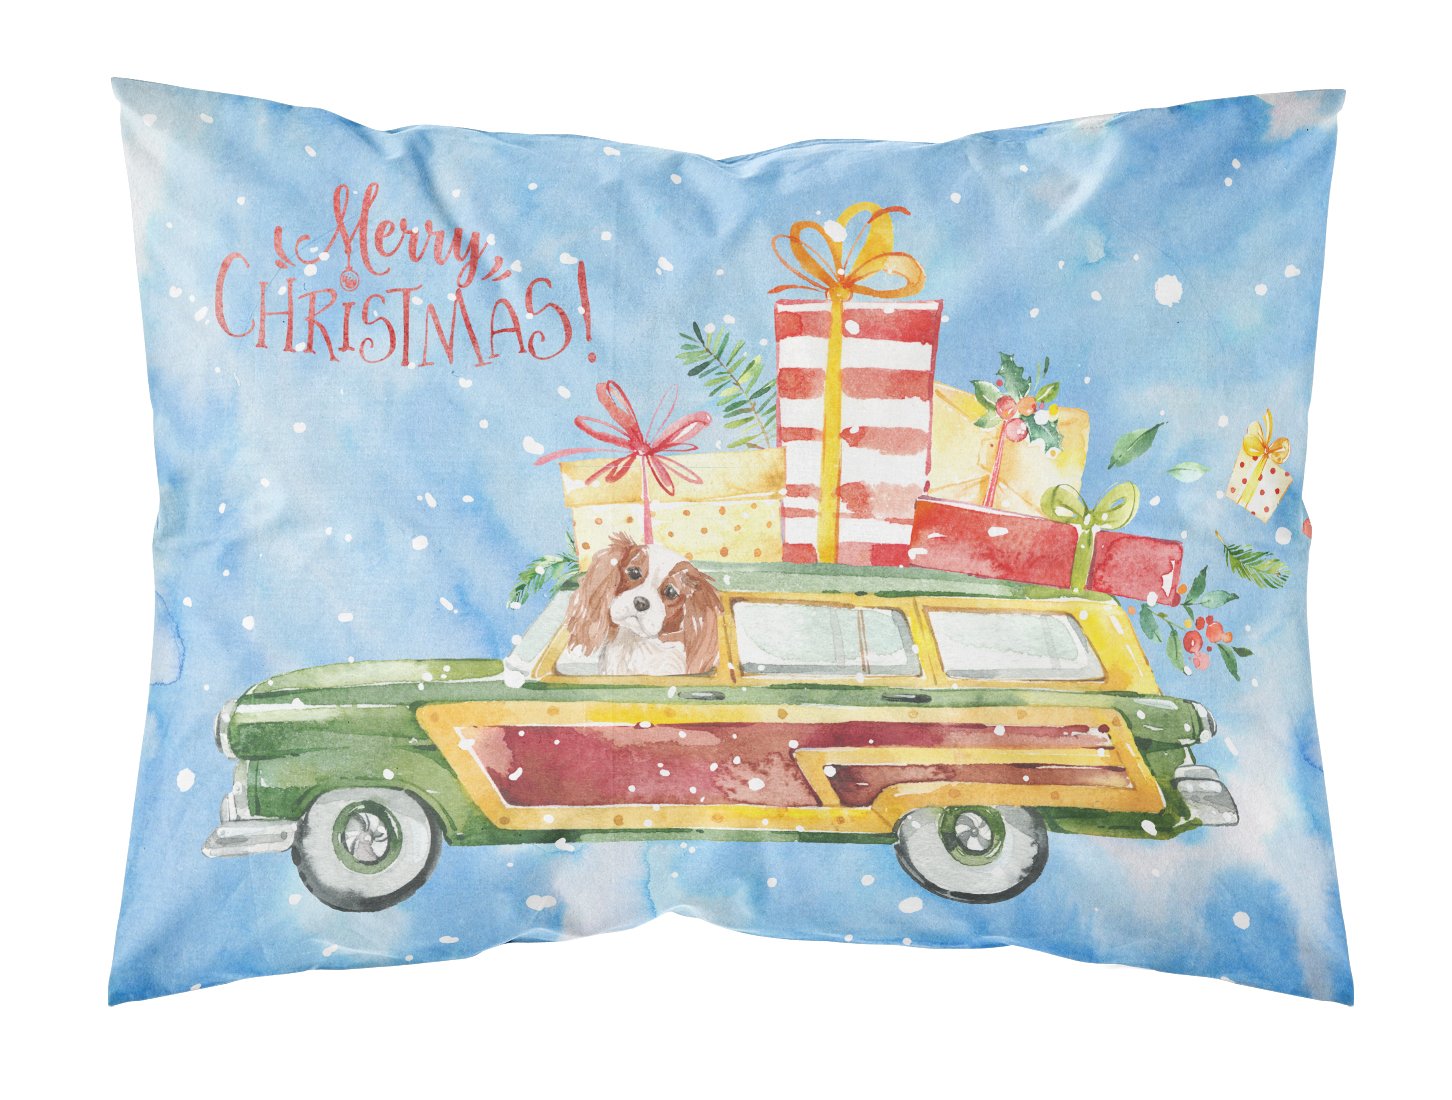 Merry Christmas Blenheim Cavalier Spaniel Fabric Standard Pillowcase CK2438PILLOWCASE by Caroline's Treasures